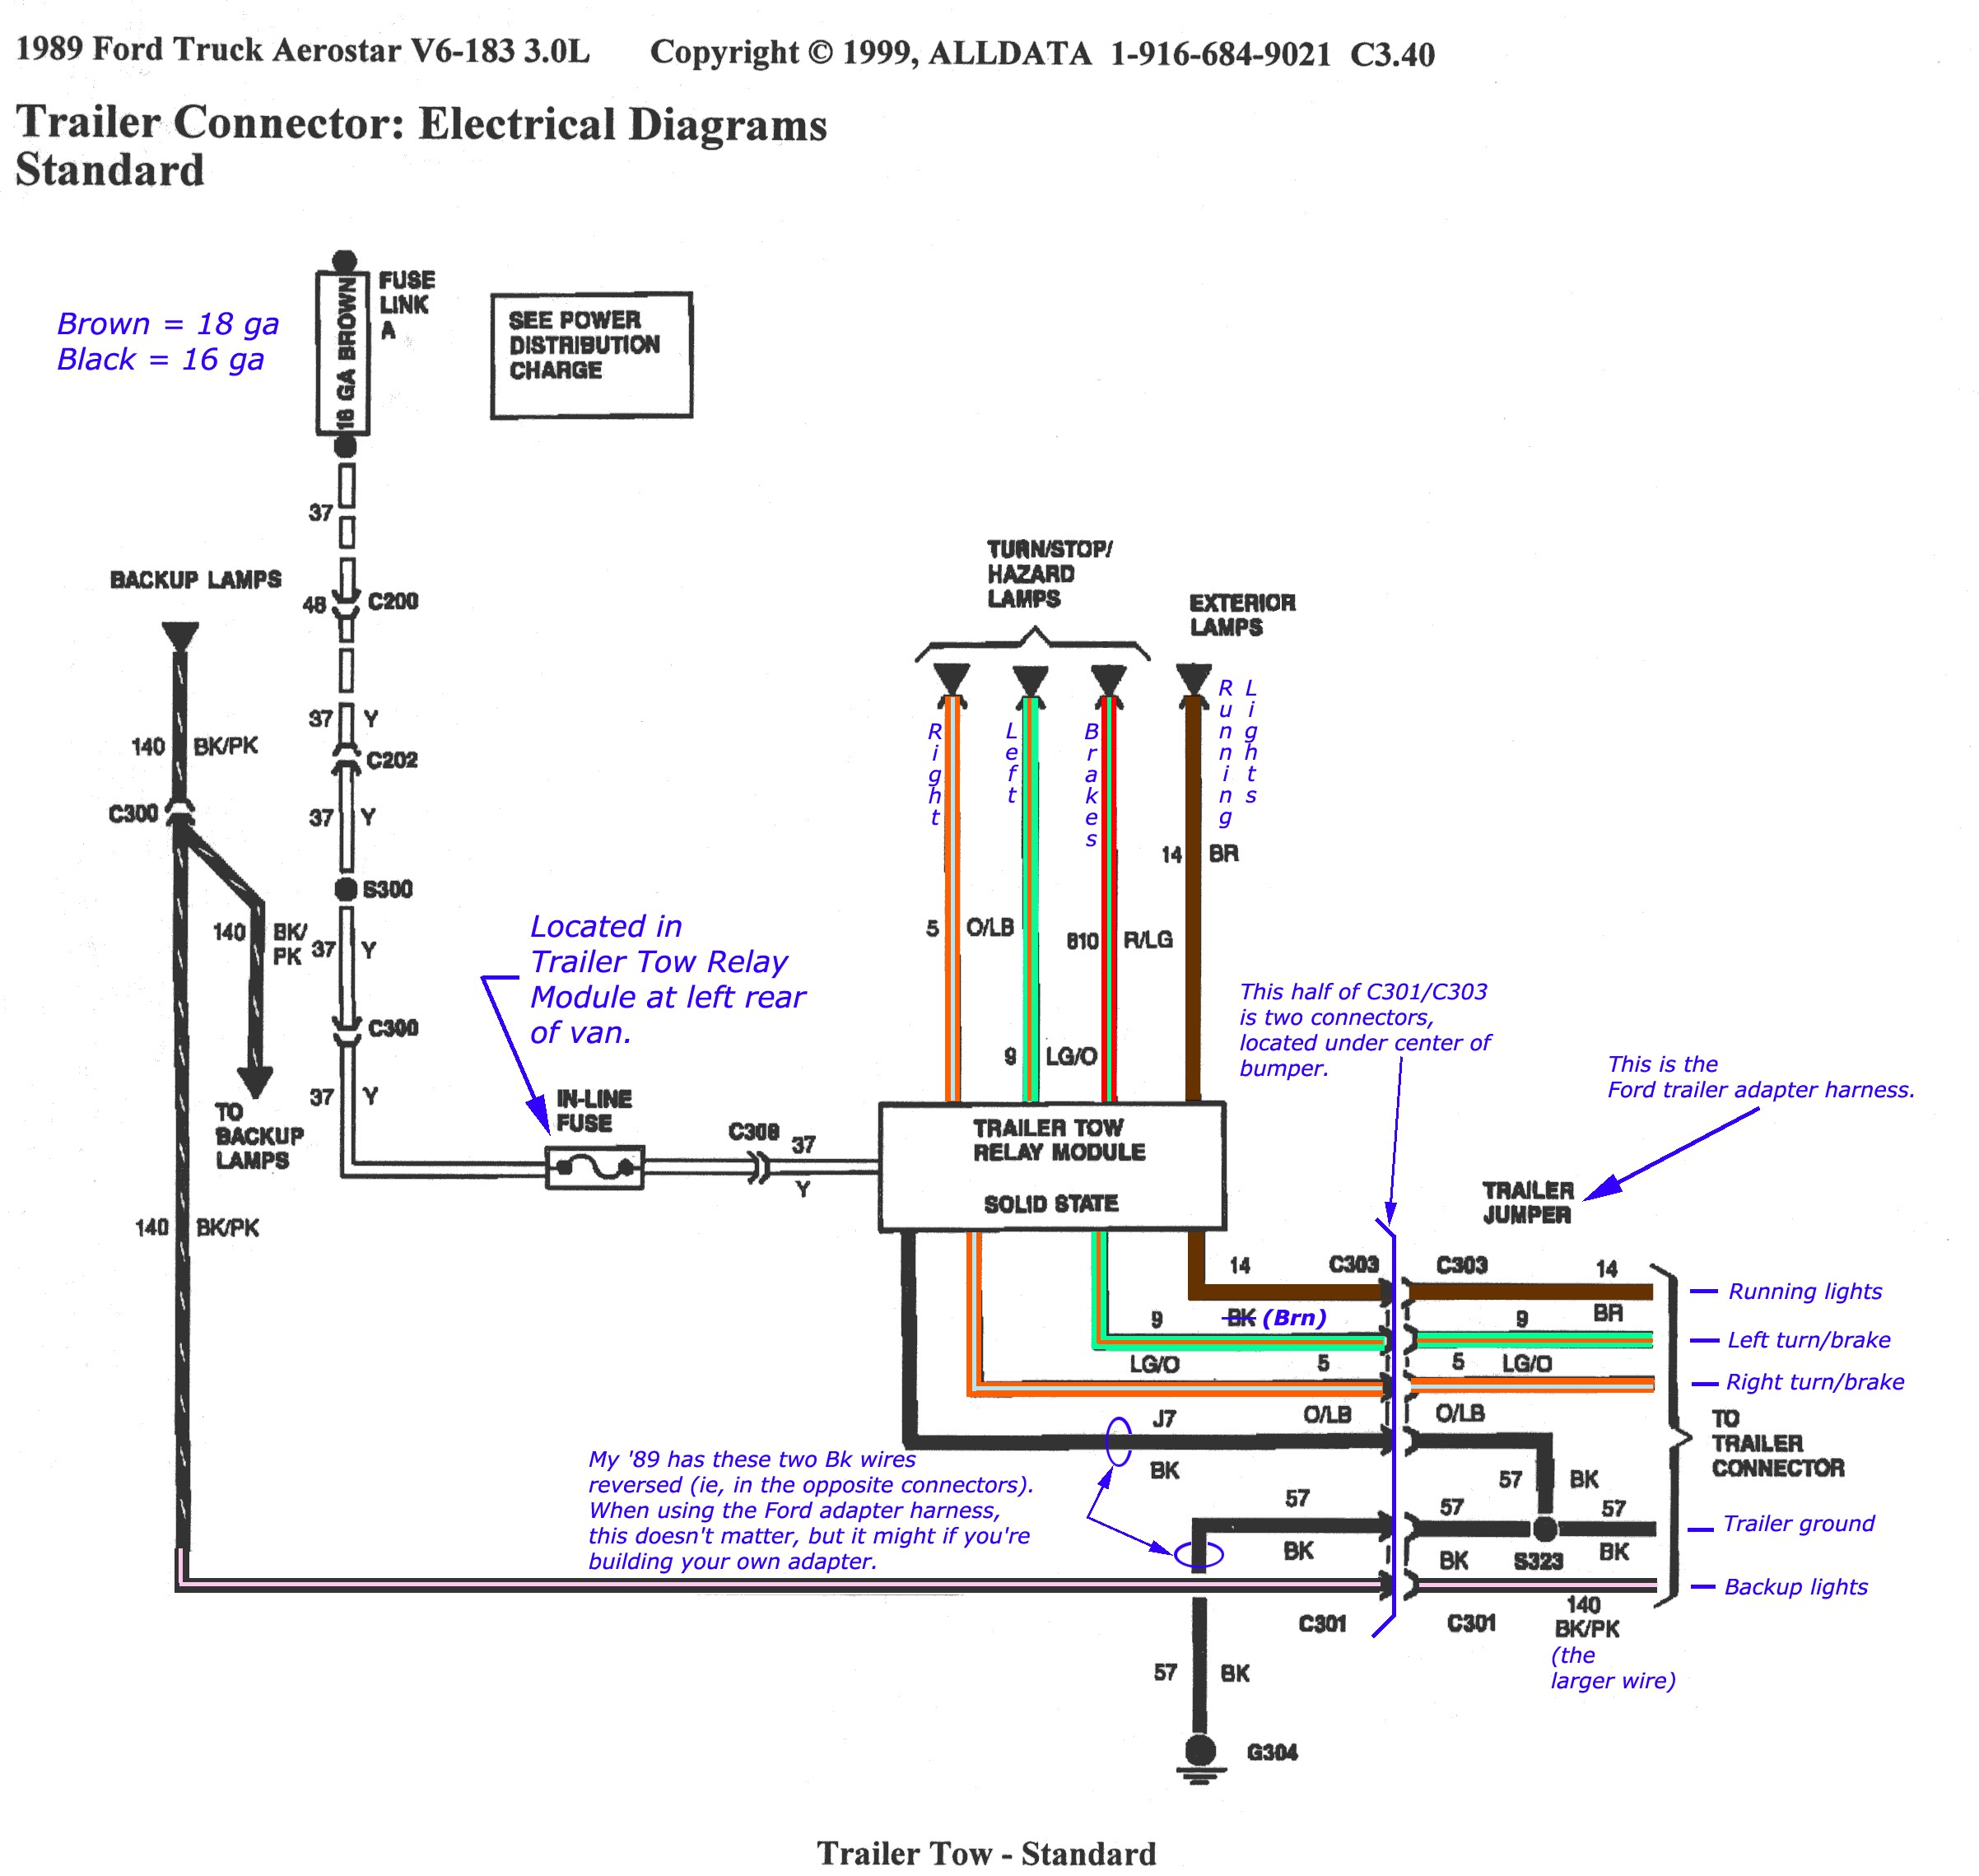 2003 F250 Trailer Wiring Diagram | Wiring Diagram - Wiring Diagram For Trailer